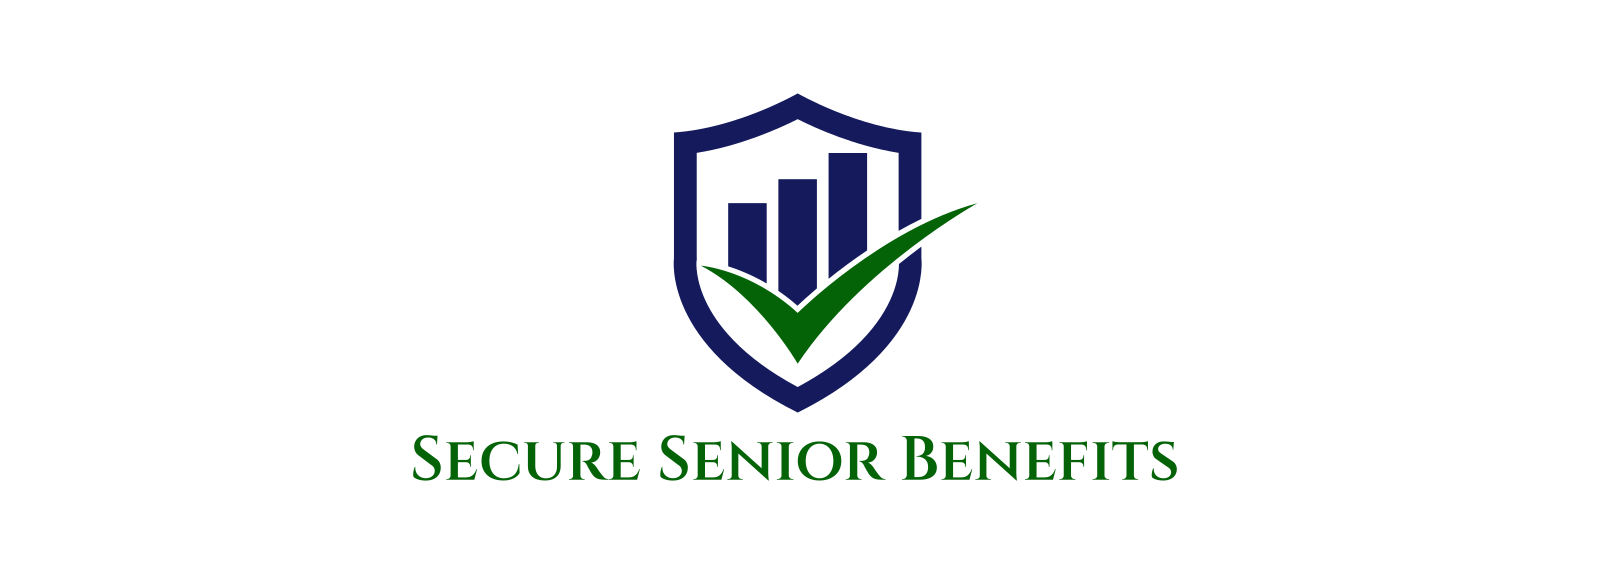 Secure Senior Benefits